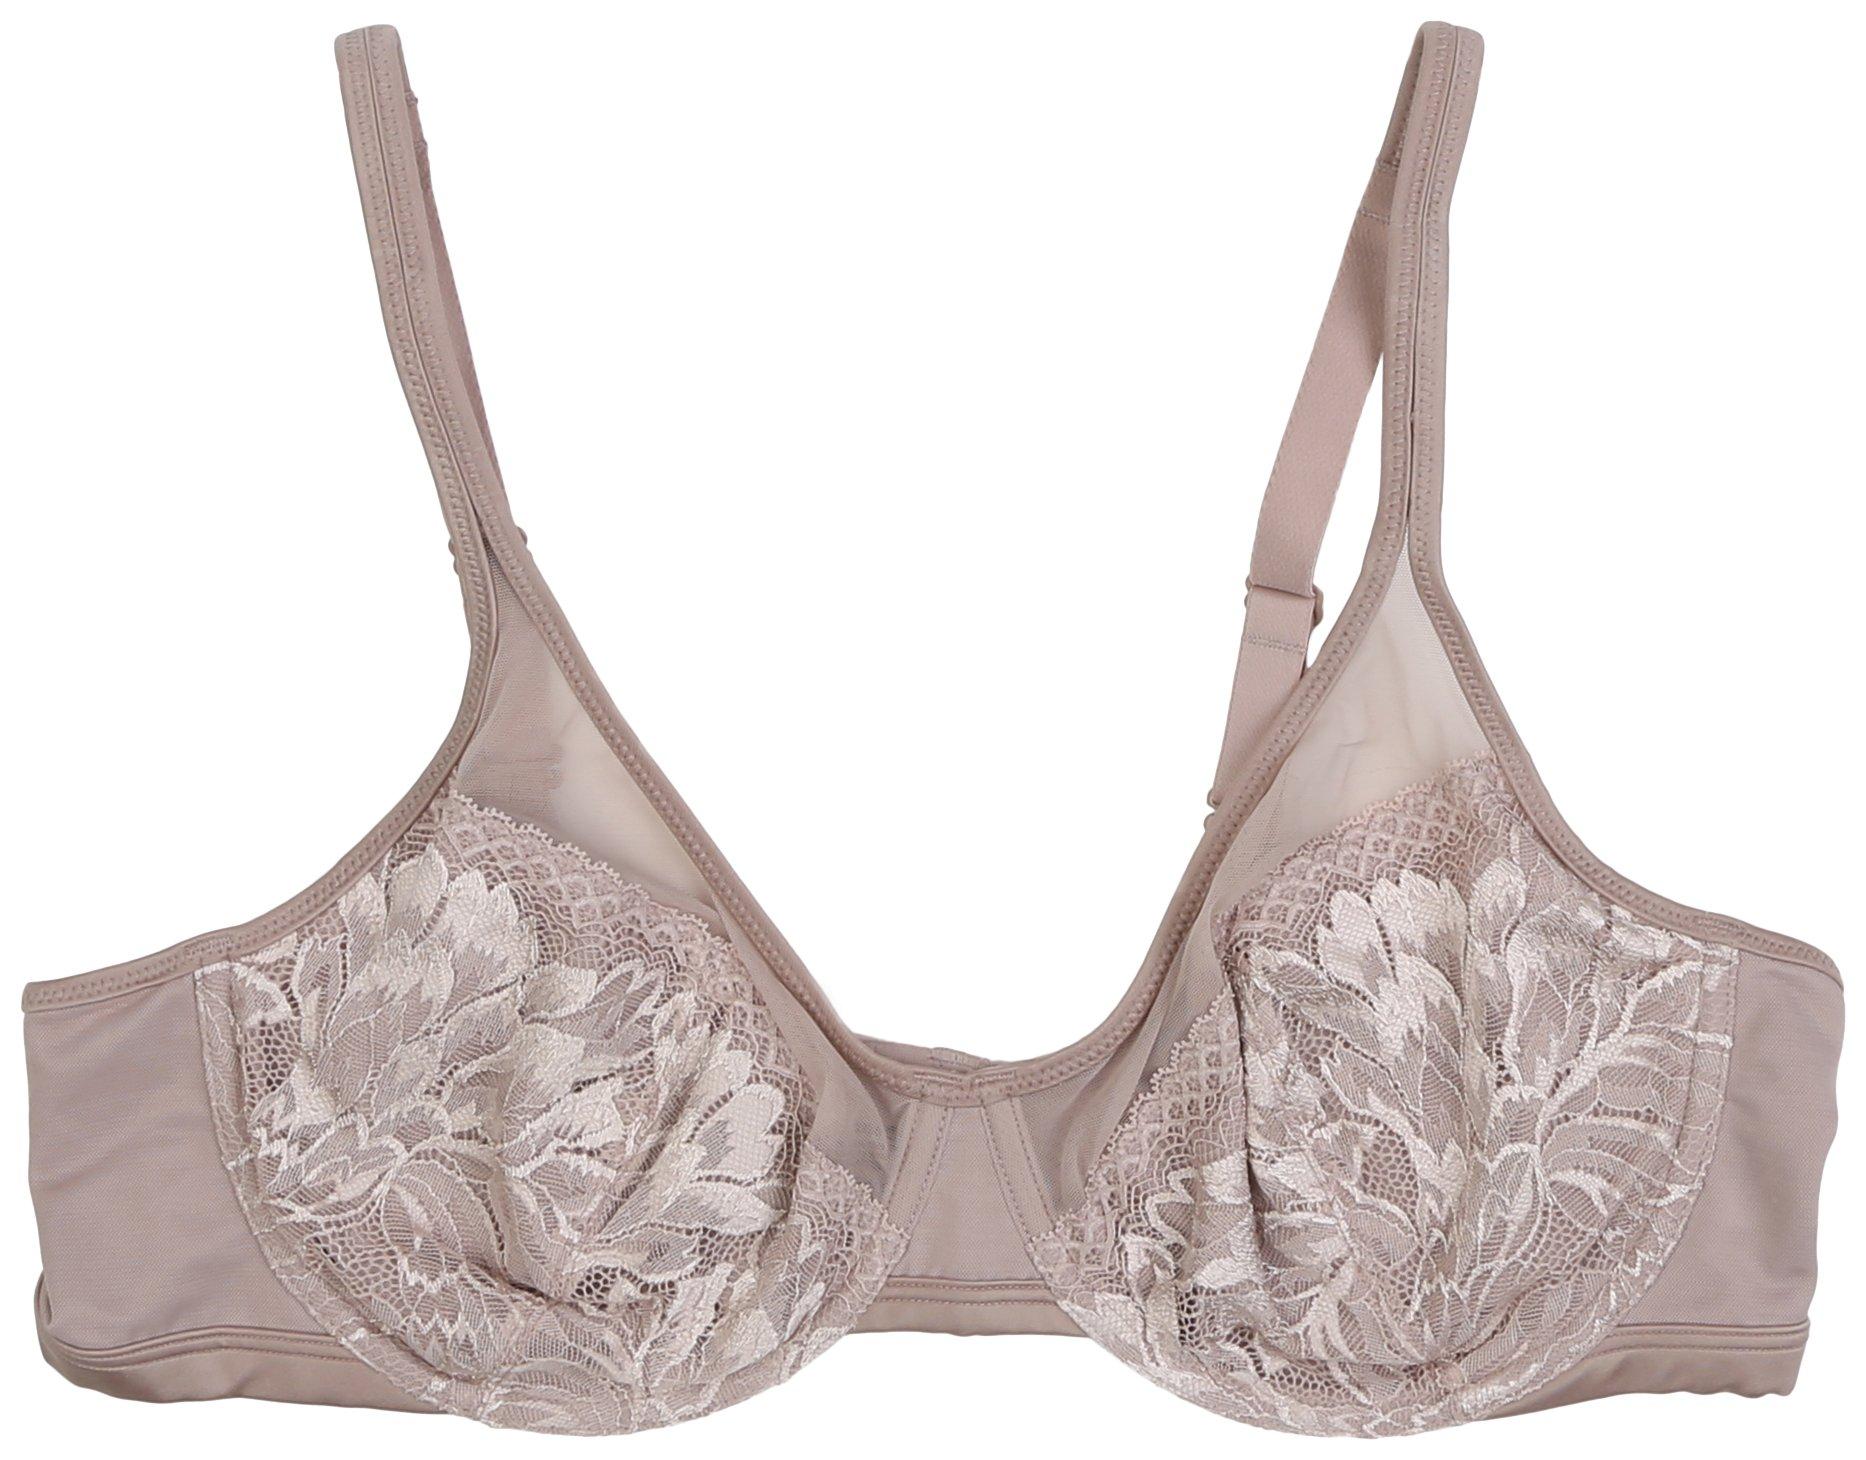 Victoria's Secret Victoria secret bra 36C Pink Size undefined - $19